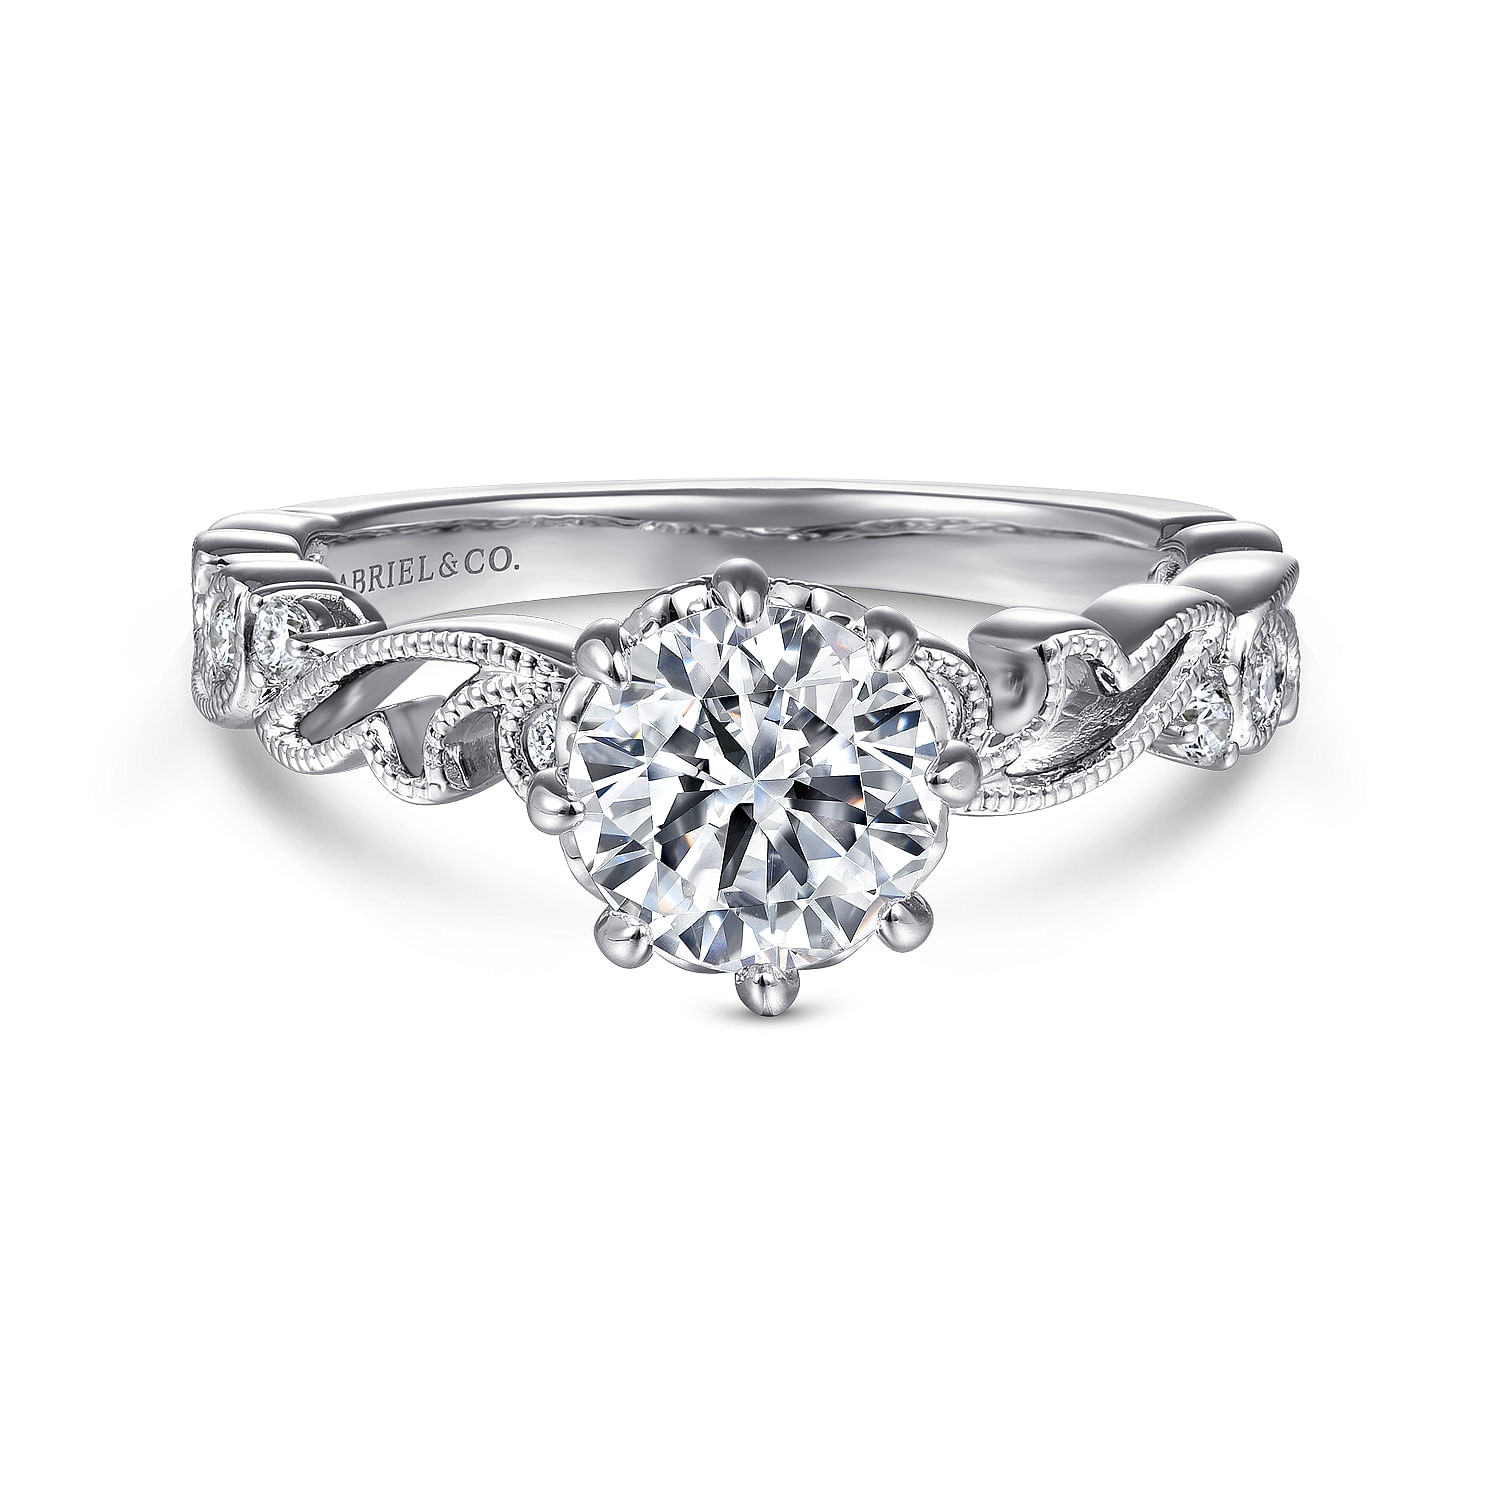 Arlington - Vintage Inspired 14K White Gold Round Diamond Engagement Ring